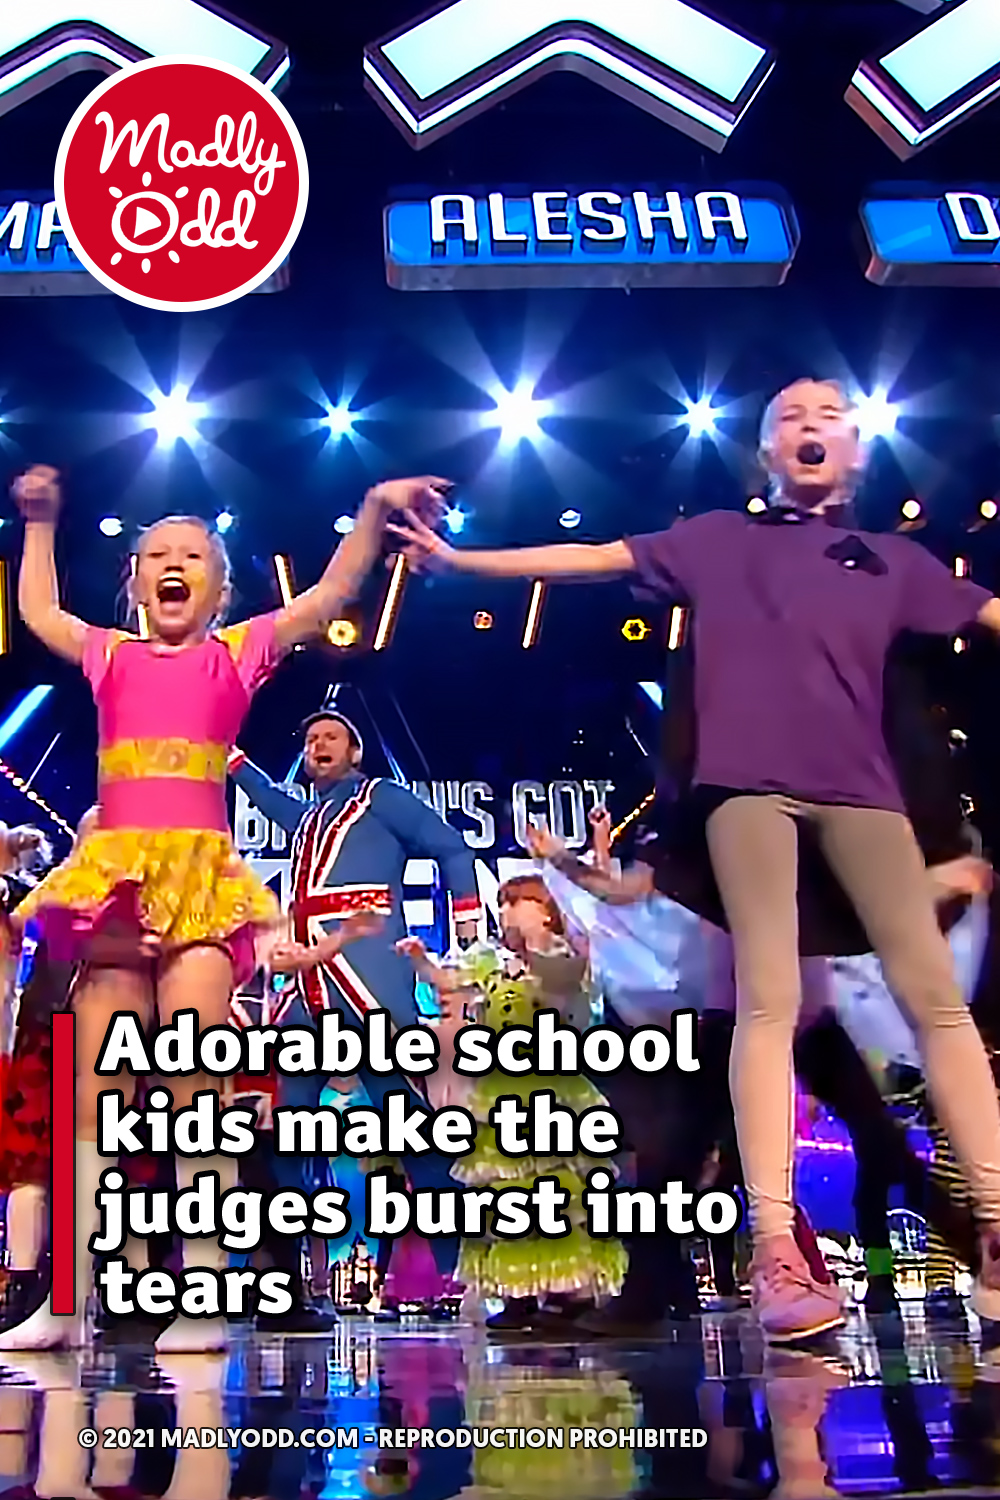 Adorable school kids make the judges burst into tears